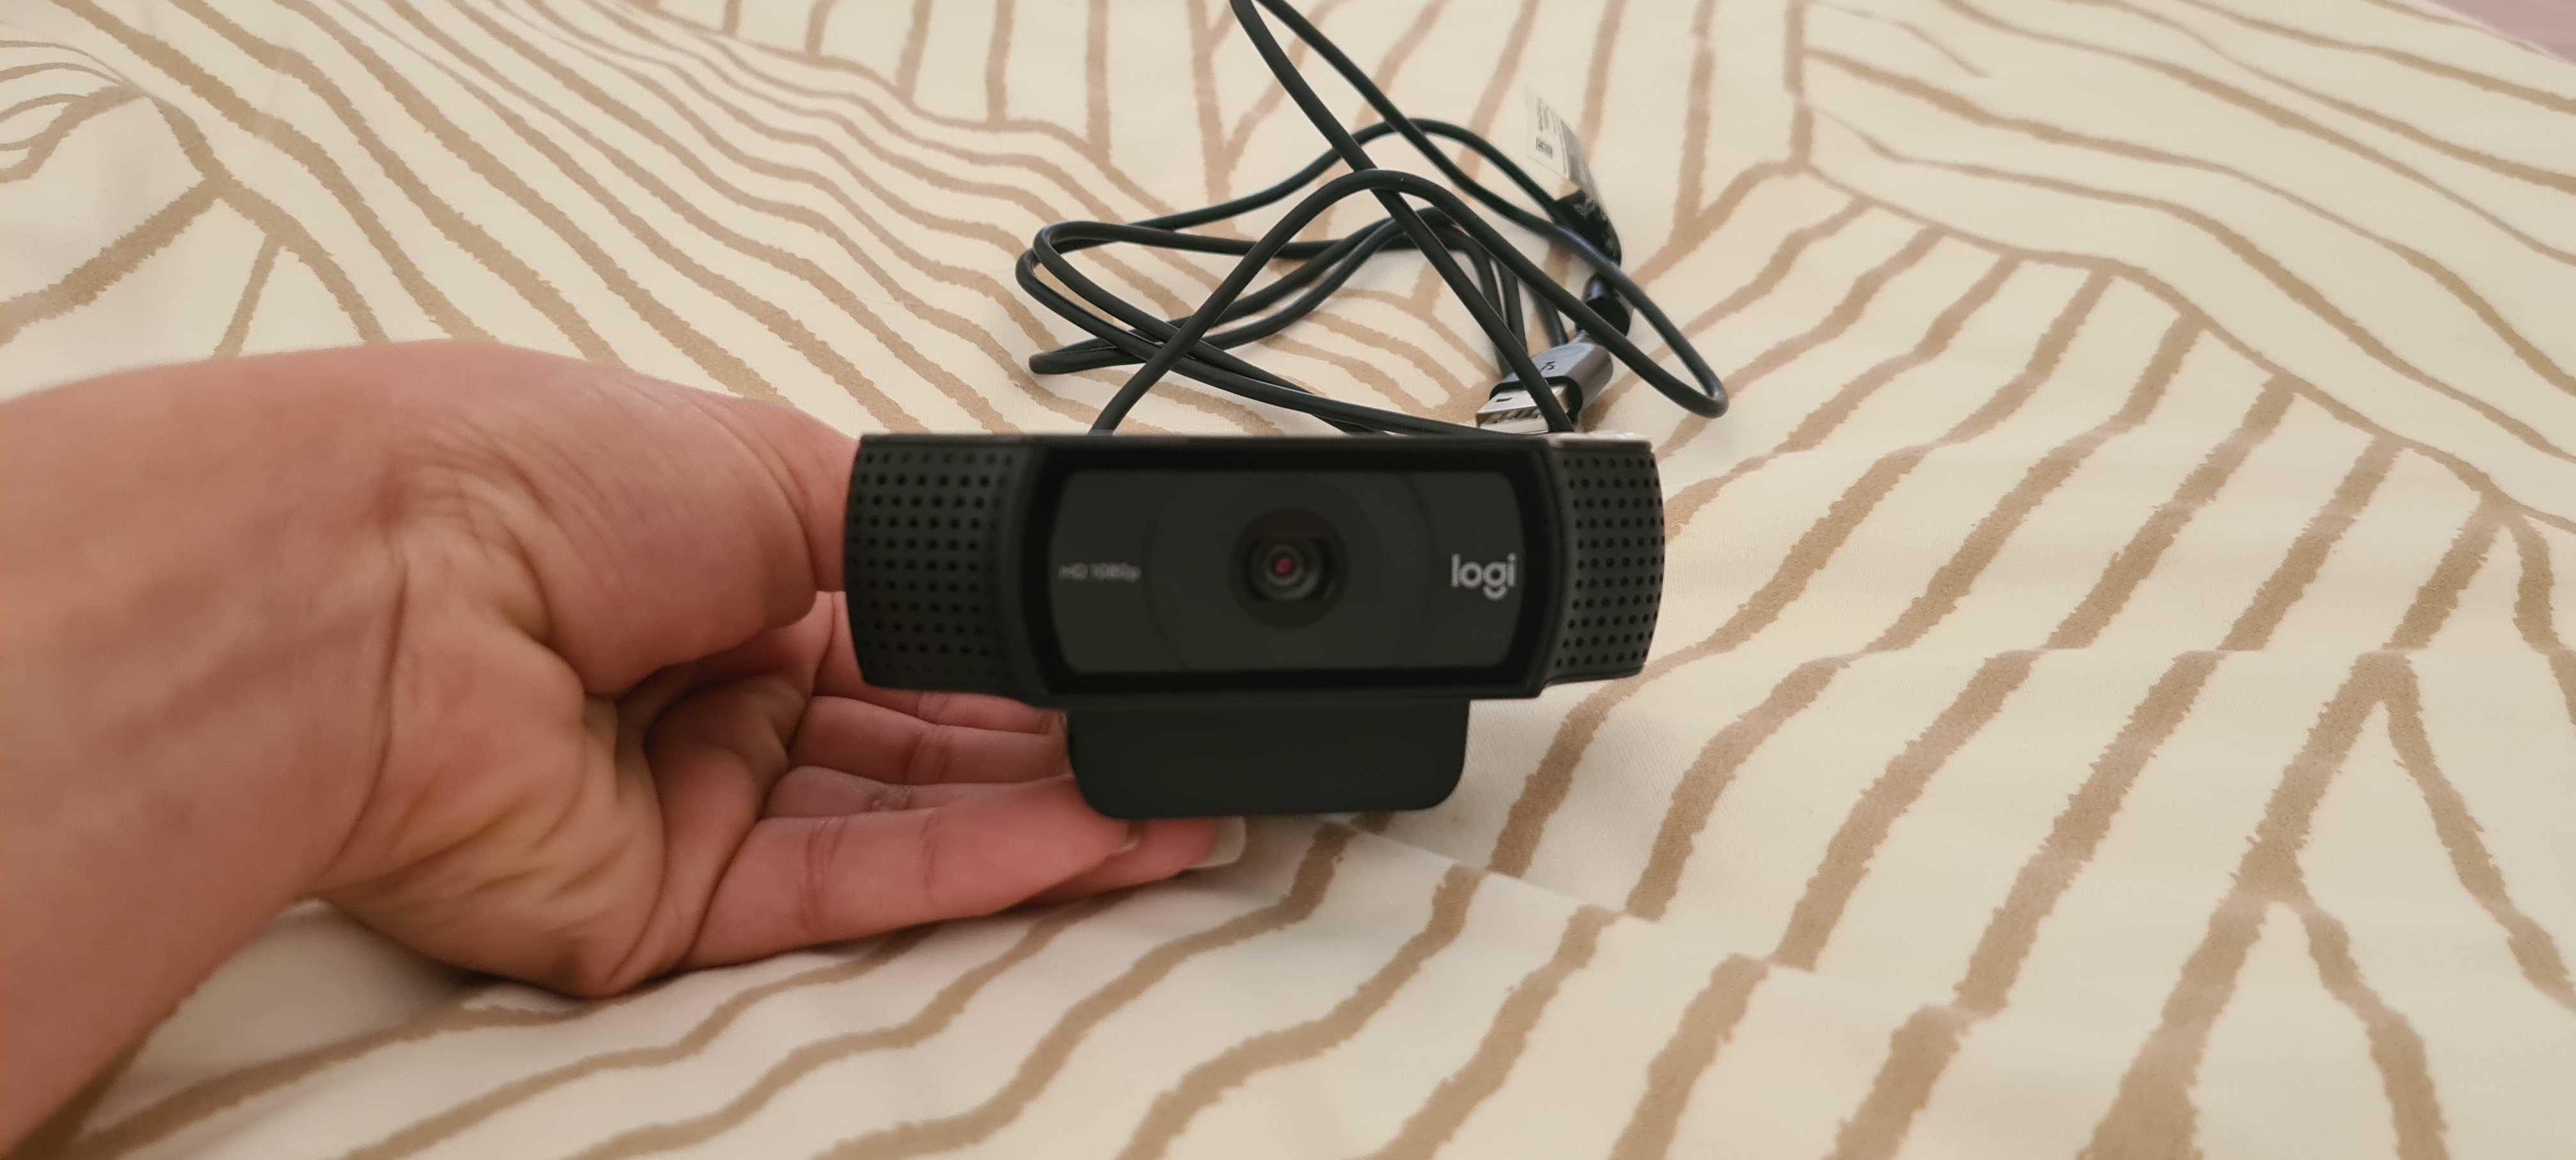 Webcam LOGITECH C920 (Full HD - 10 MP - Microfone Incorporado)